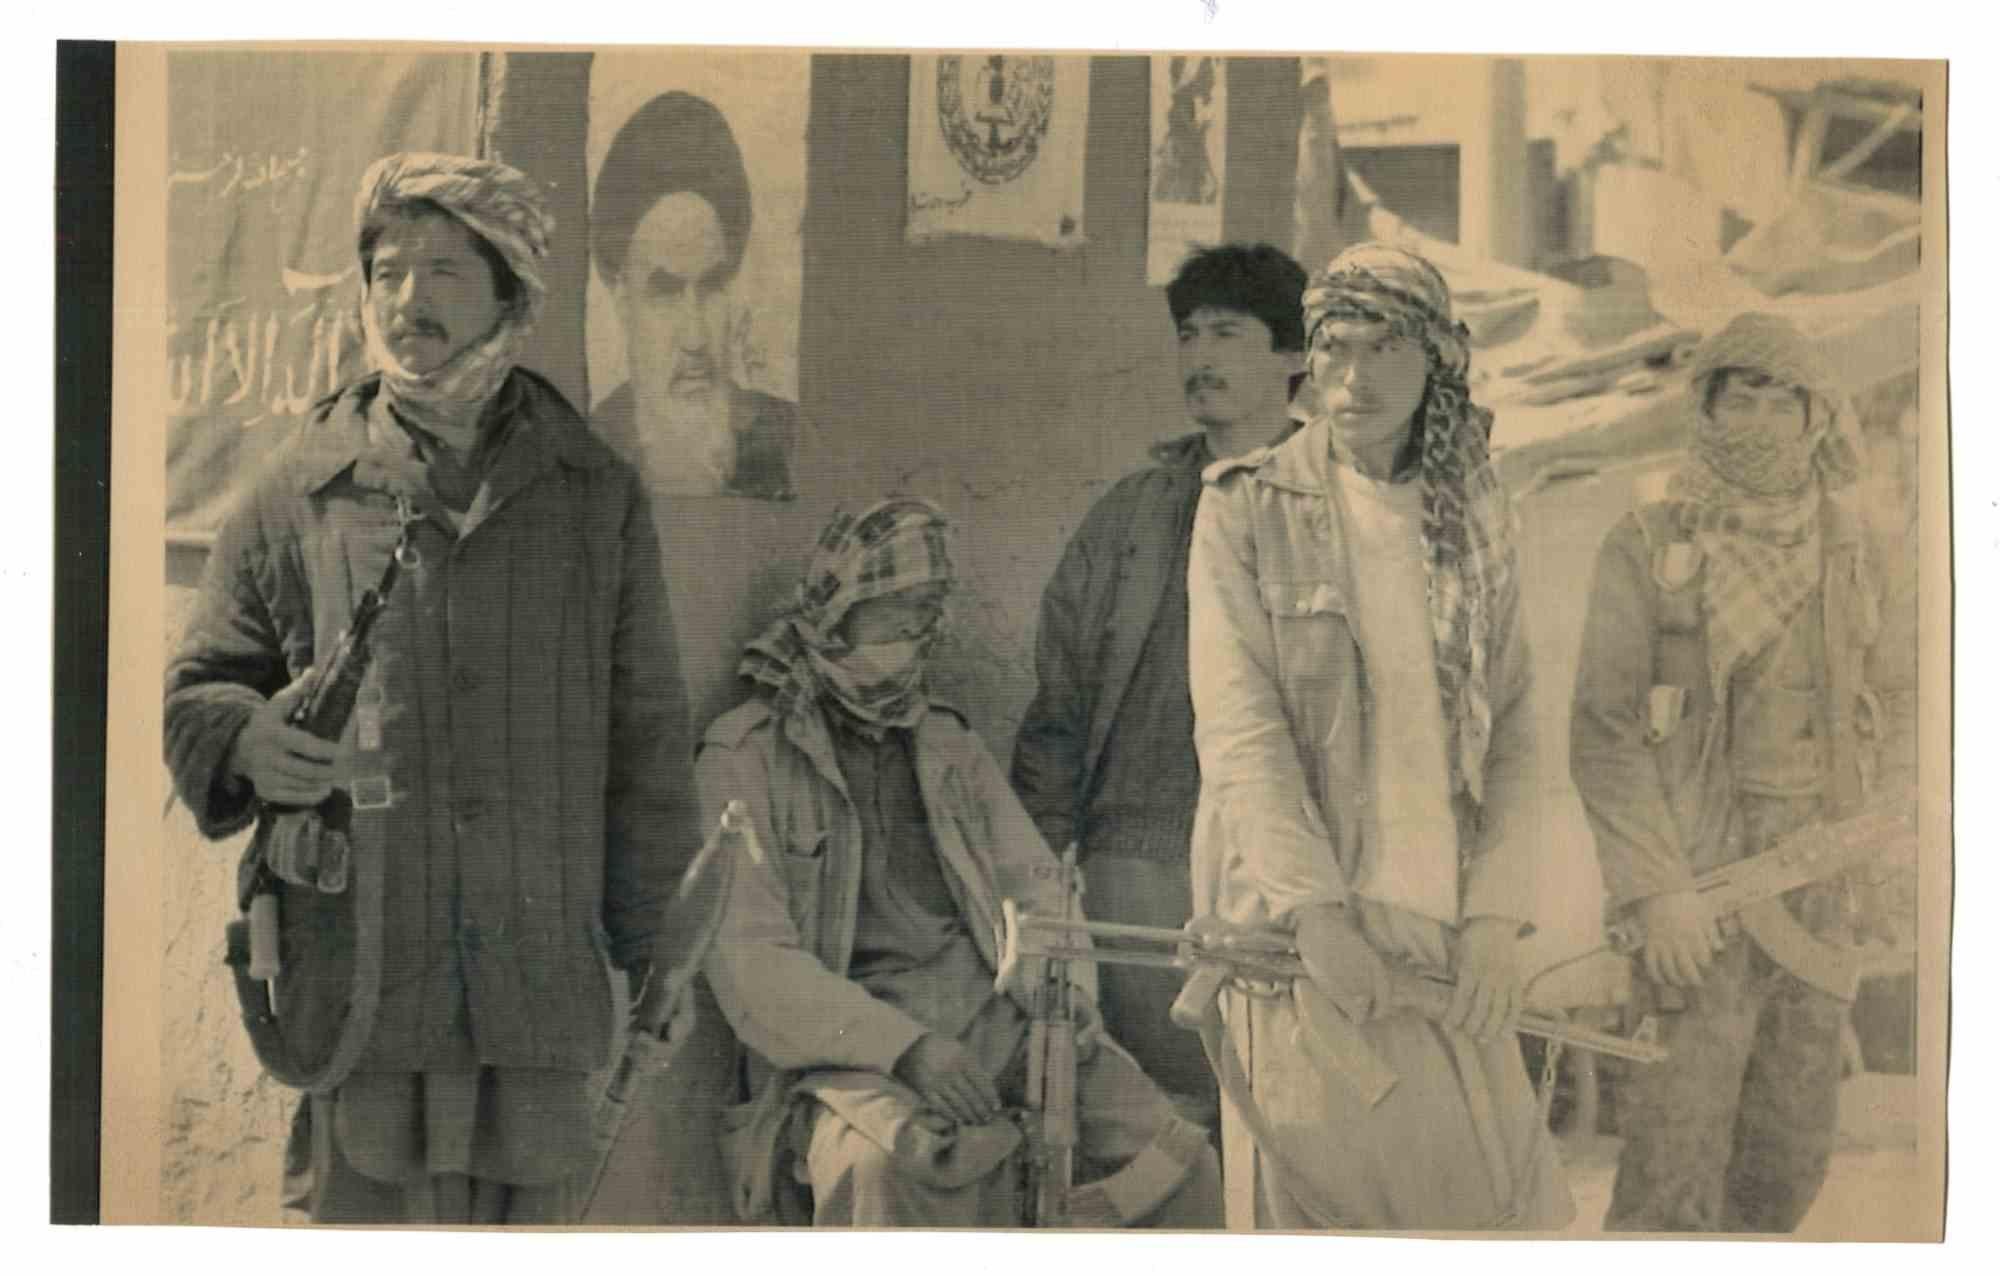 Unknown Portrait Photograph - Revolution in Teheran - Vintage Photo - 1970s